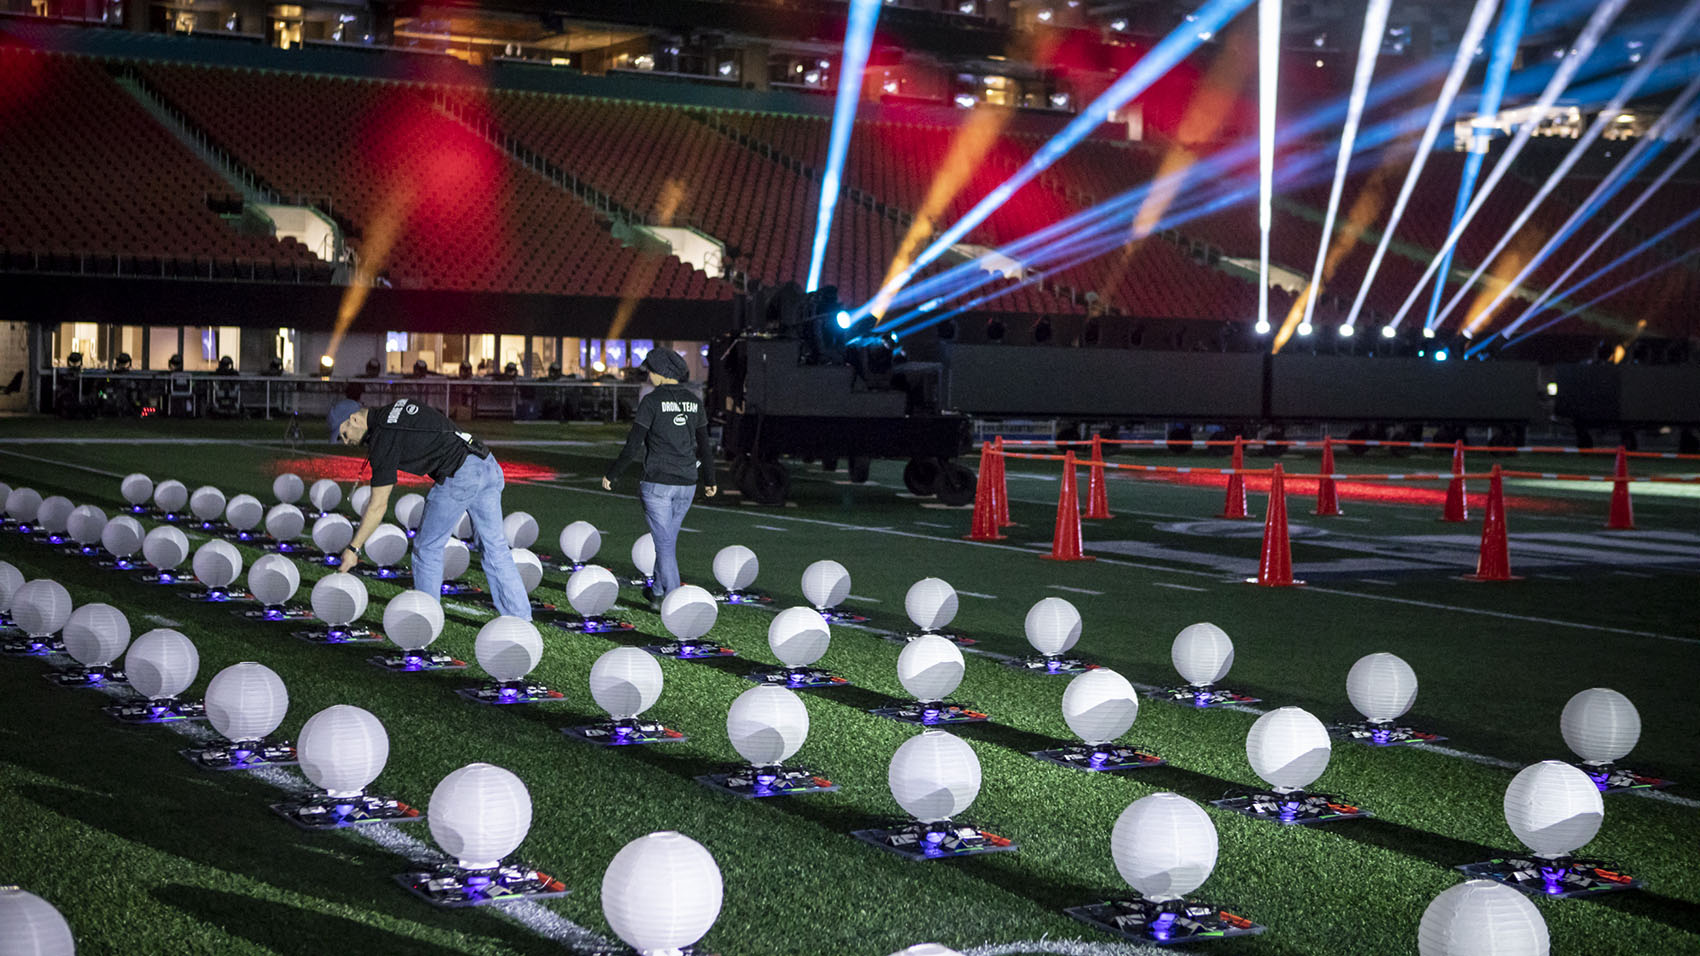 Intel Live Drone Light Show at Super Bowl LIII Halftime Show